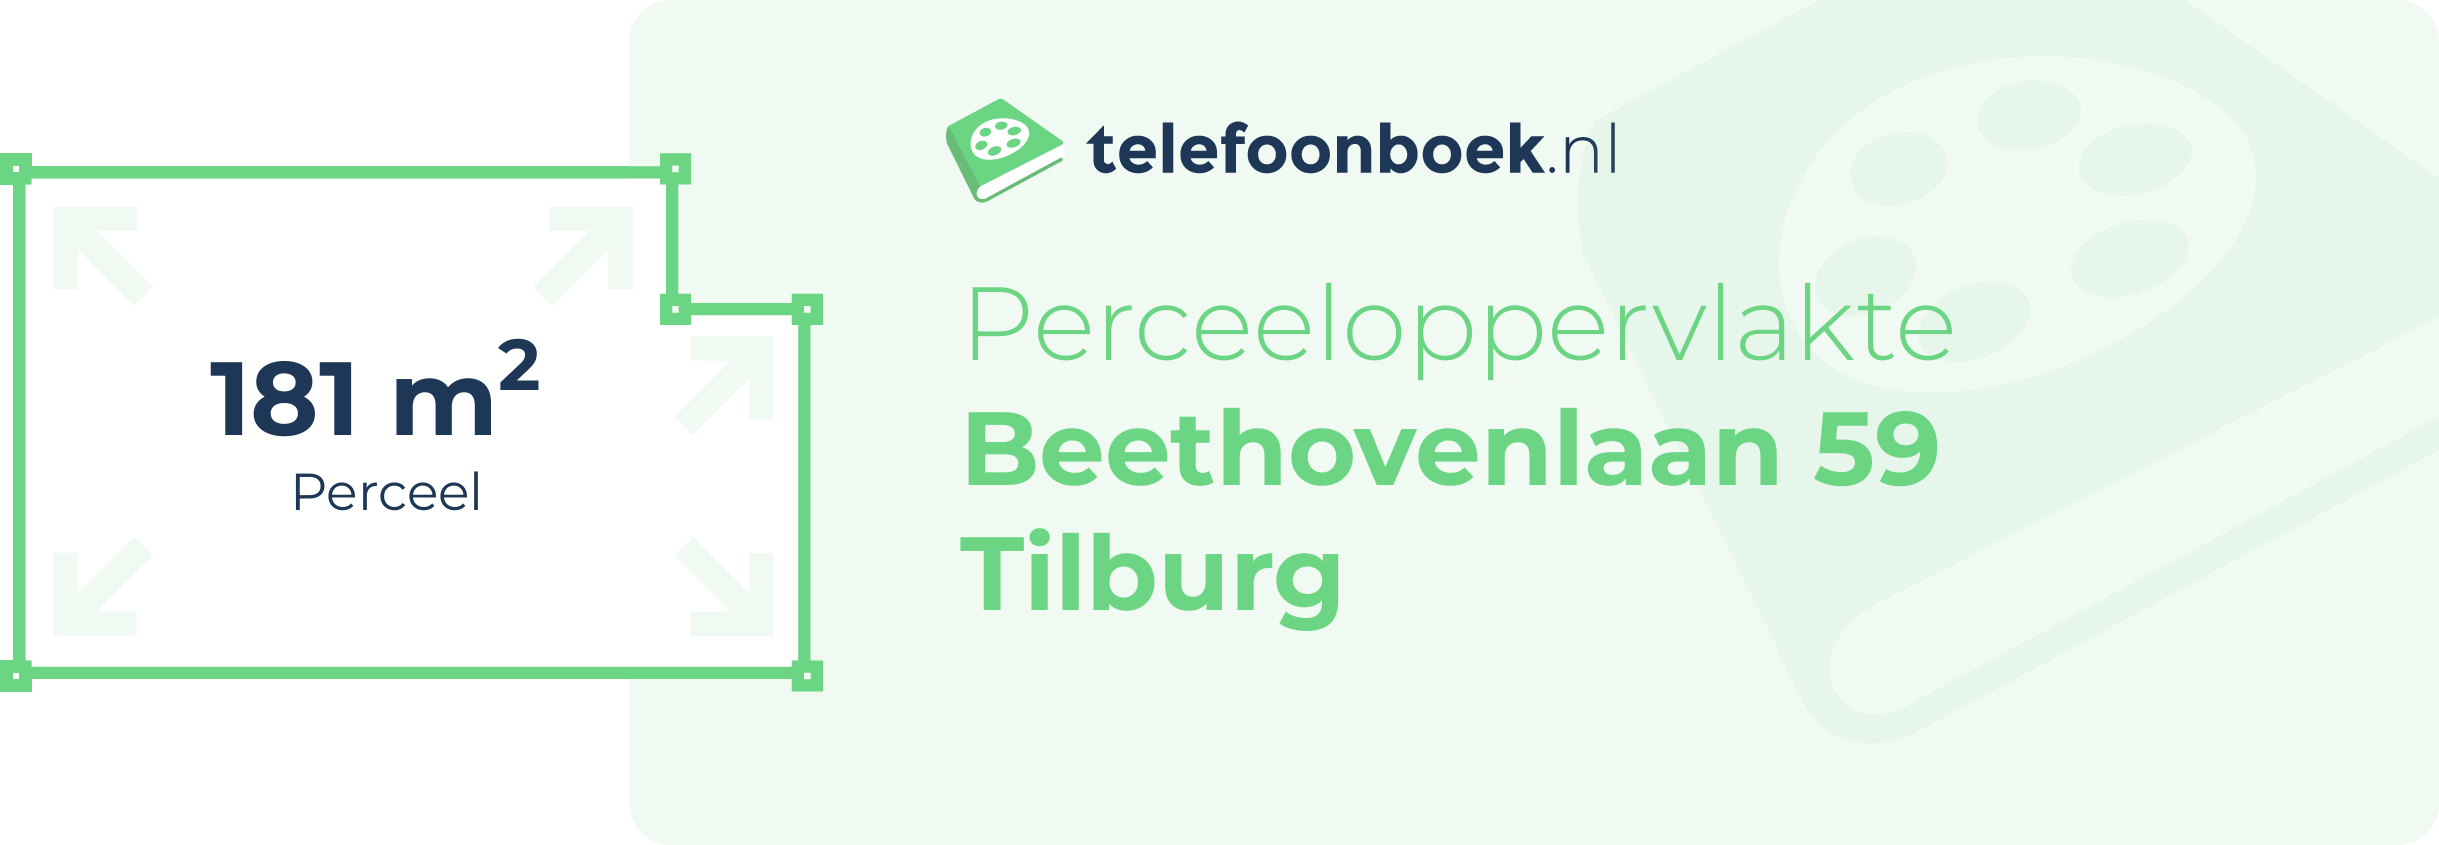 Perceeloppervlakte Beethovenlaan 59 Tilburg